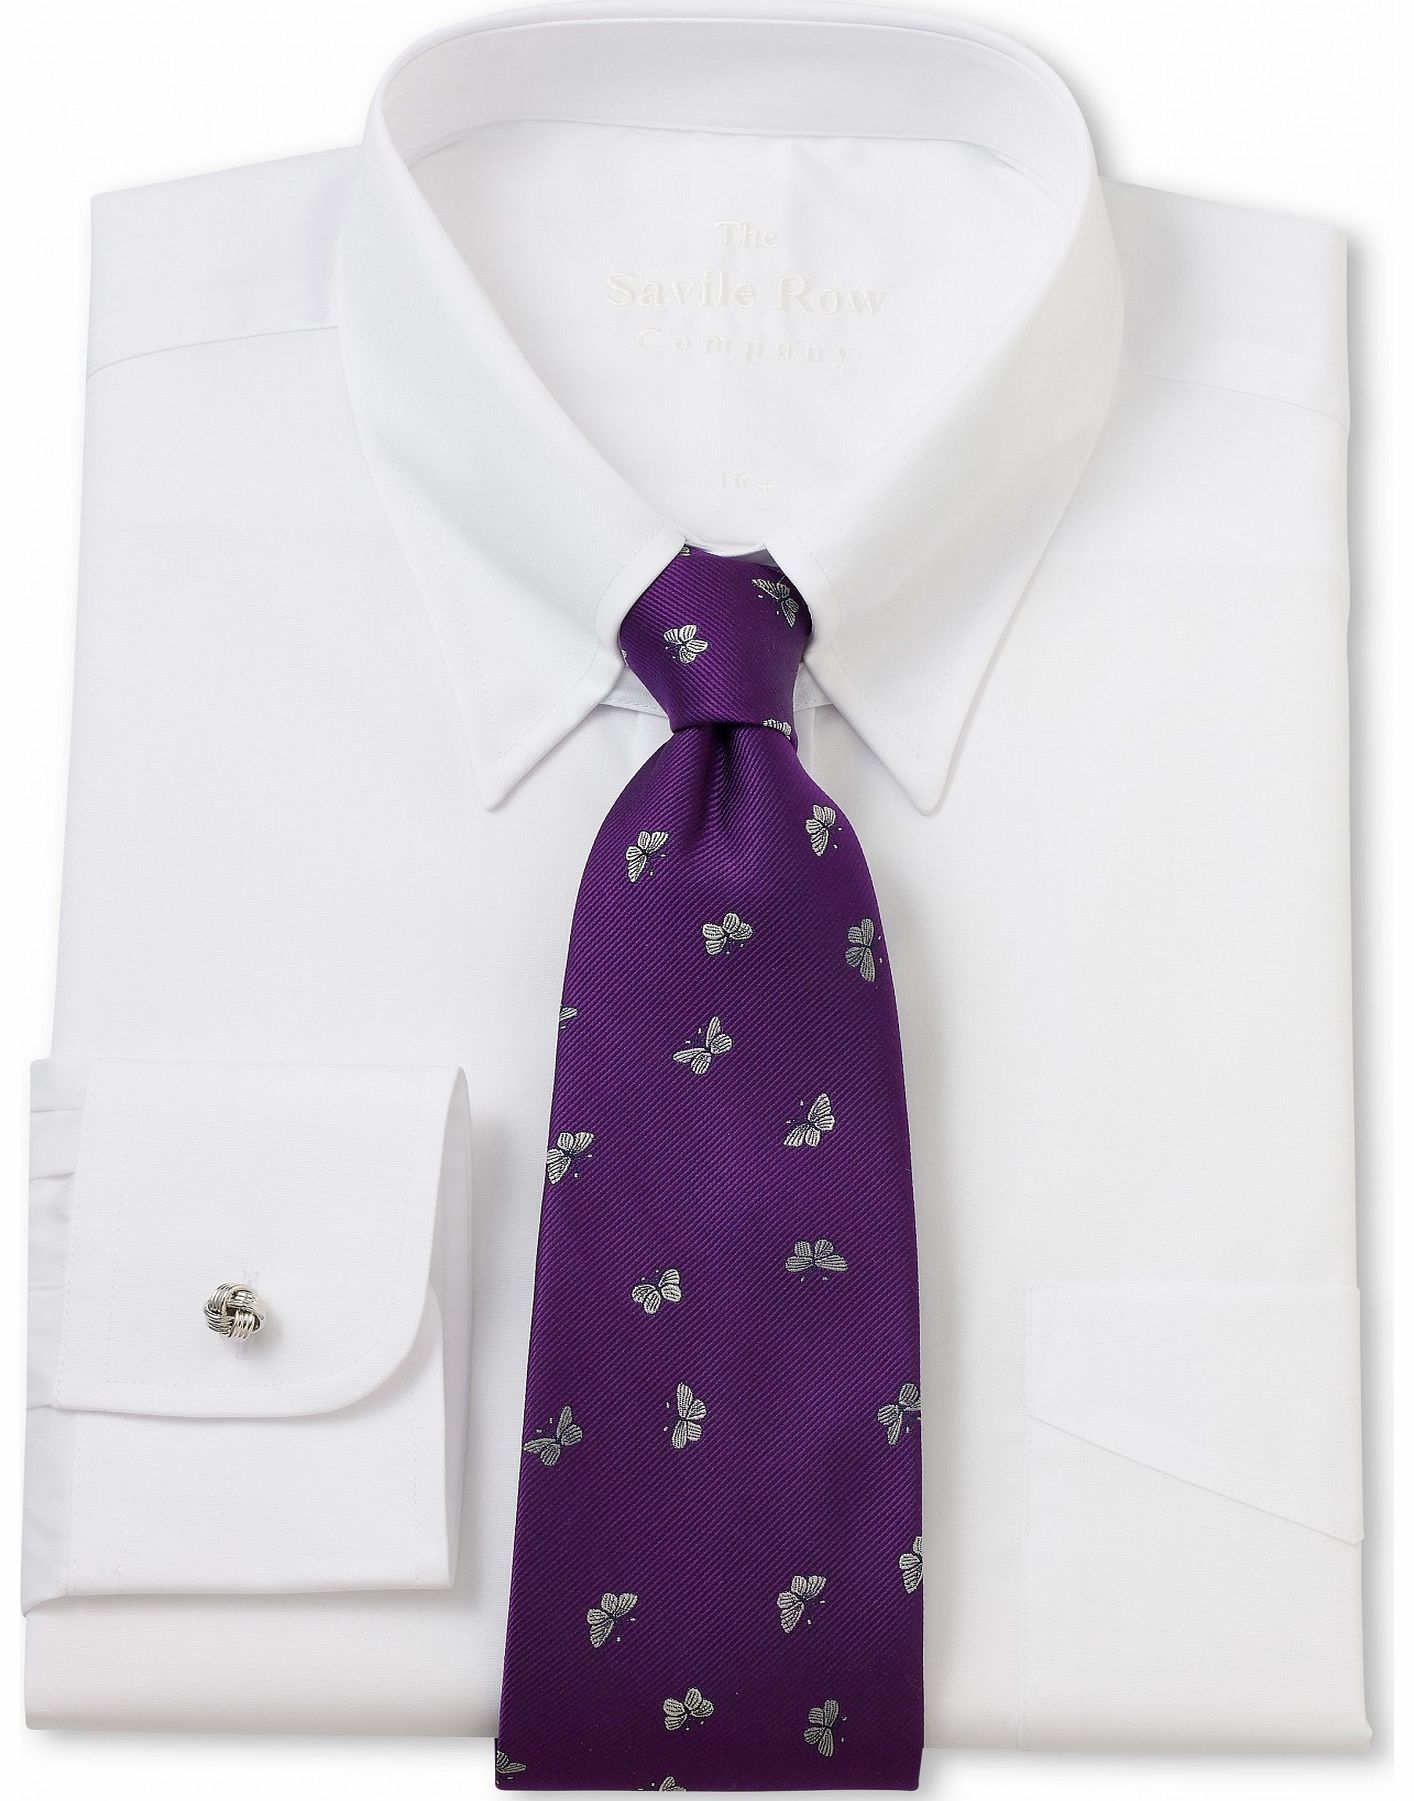 Savile Row Company White Poplin Tab Collar Classic Fit Shirt 16``